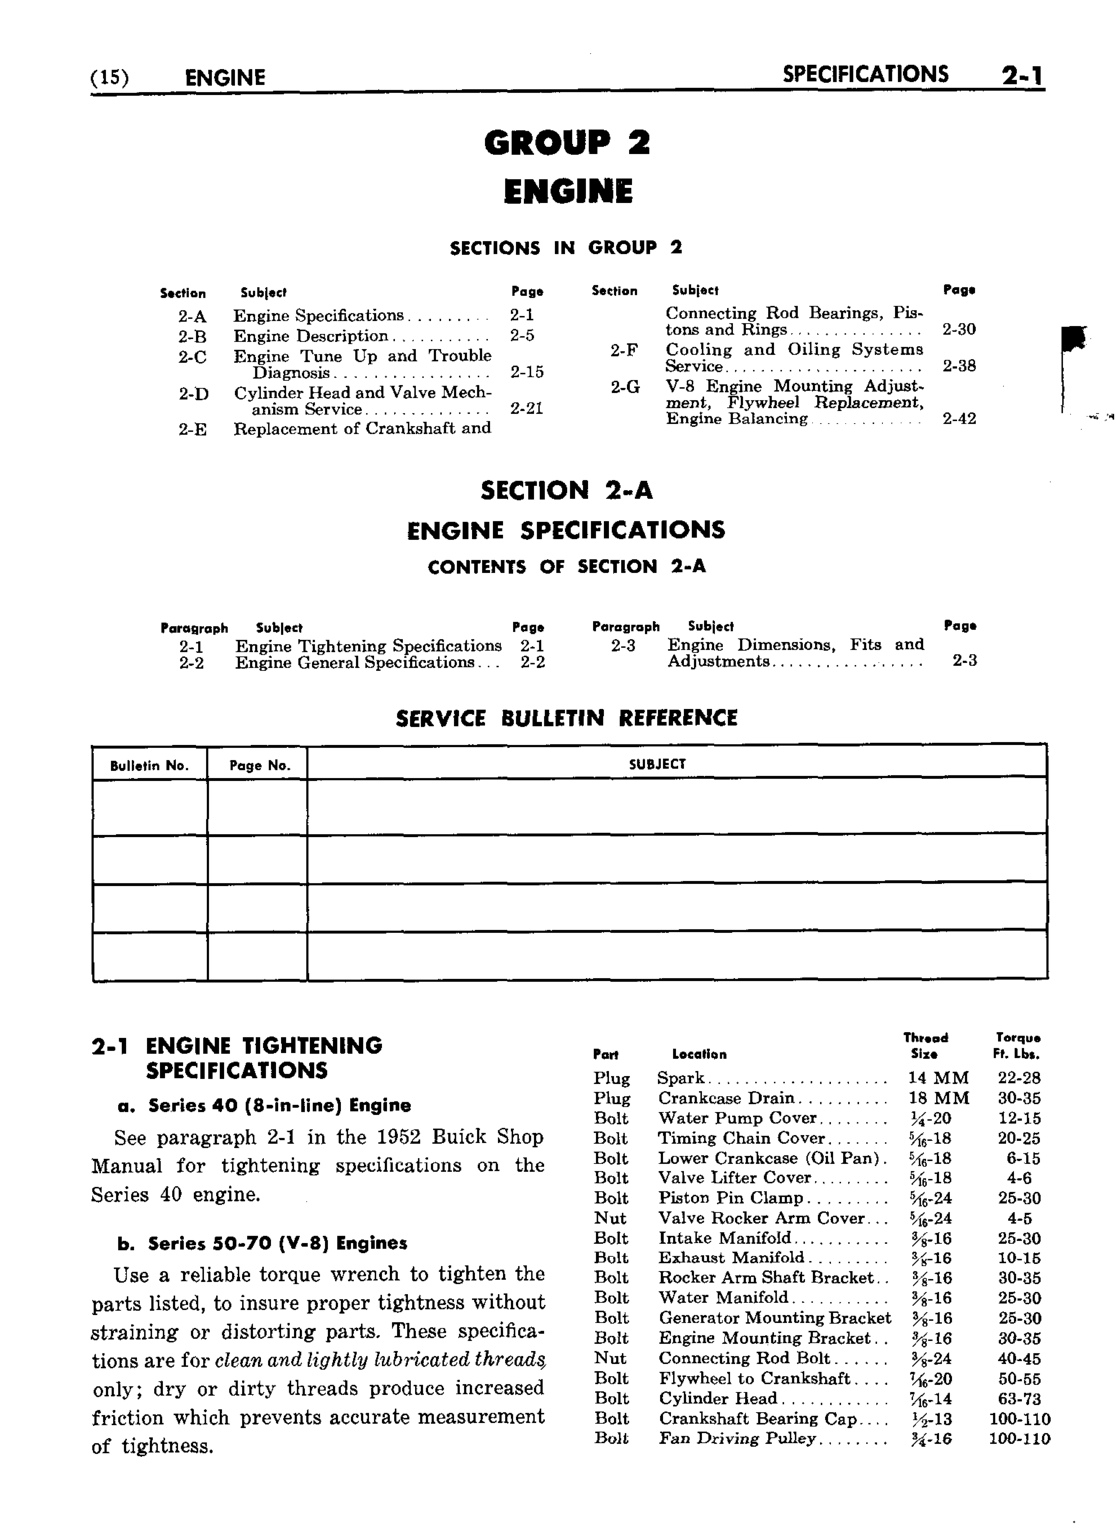 n_03 1953 Buick Shop Manual - Engine-001-001.jpg